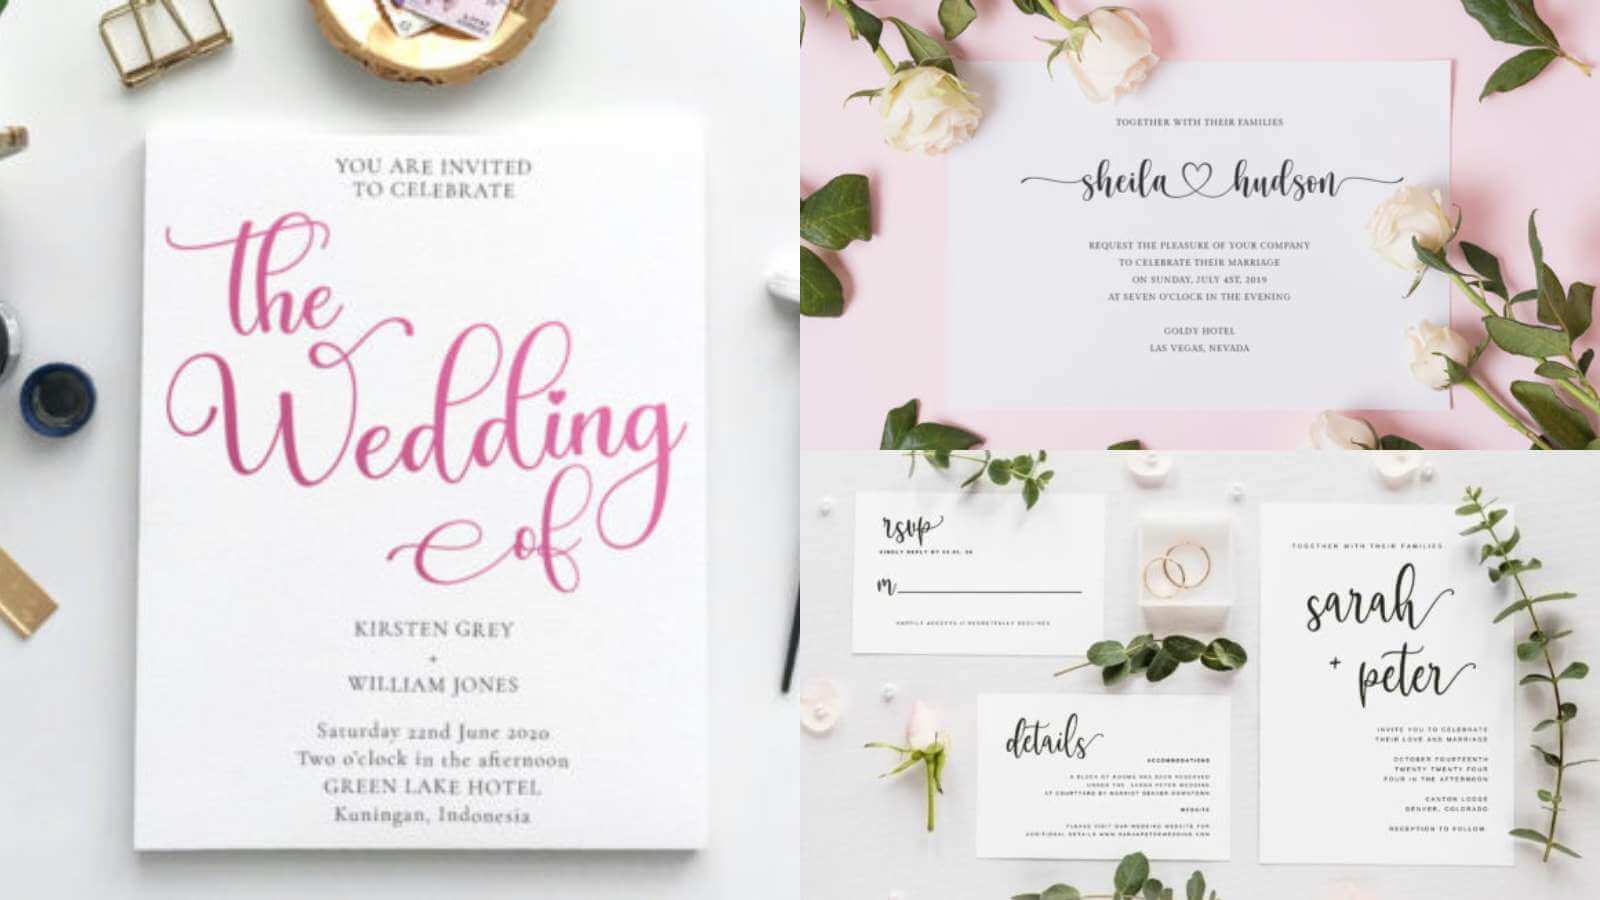 Wedding Fonts